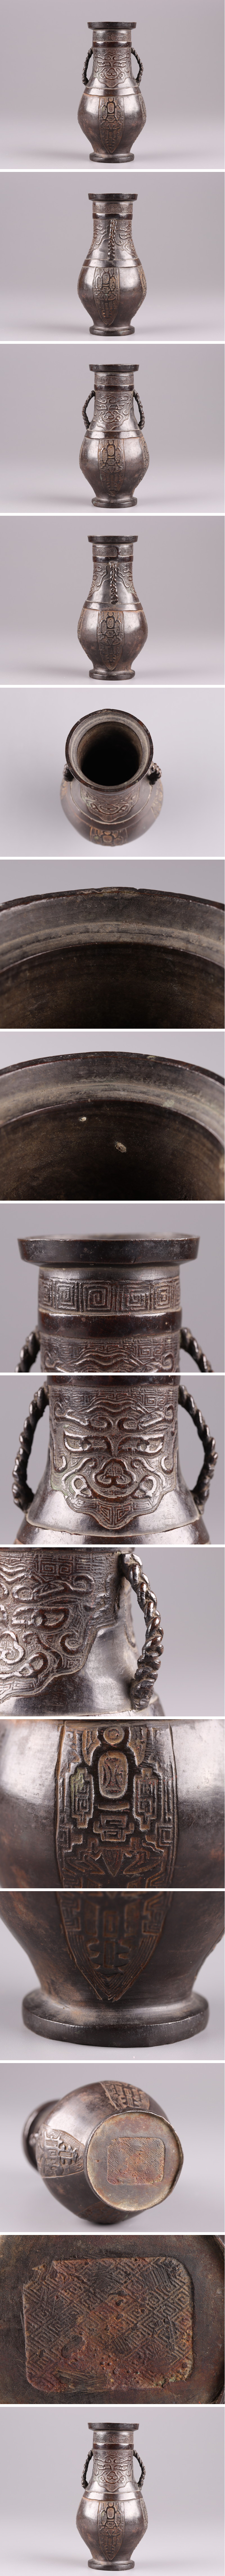 定番品質保証中国古玩 唐物 古銅造 饕餮文 双耳 花瓶 時代物 極上品 初だし品 1897 その他